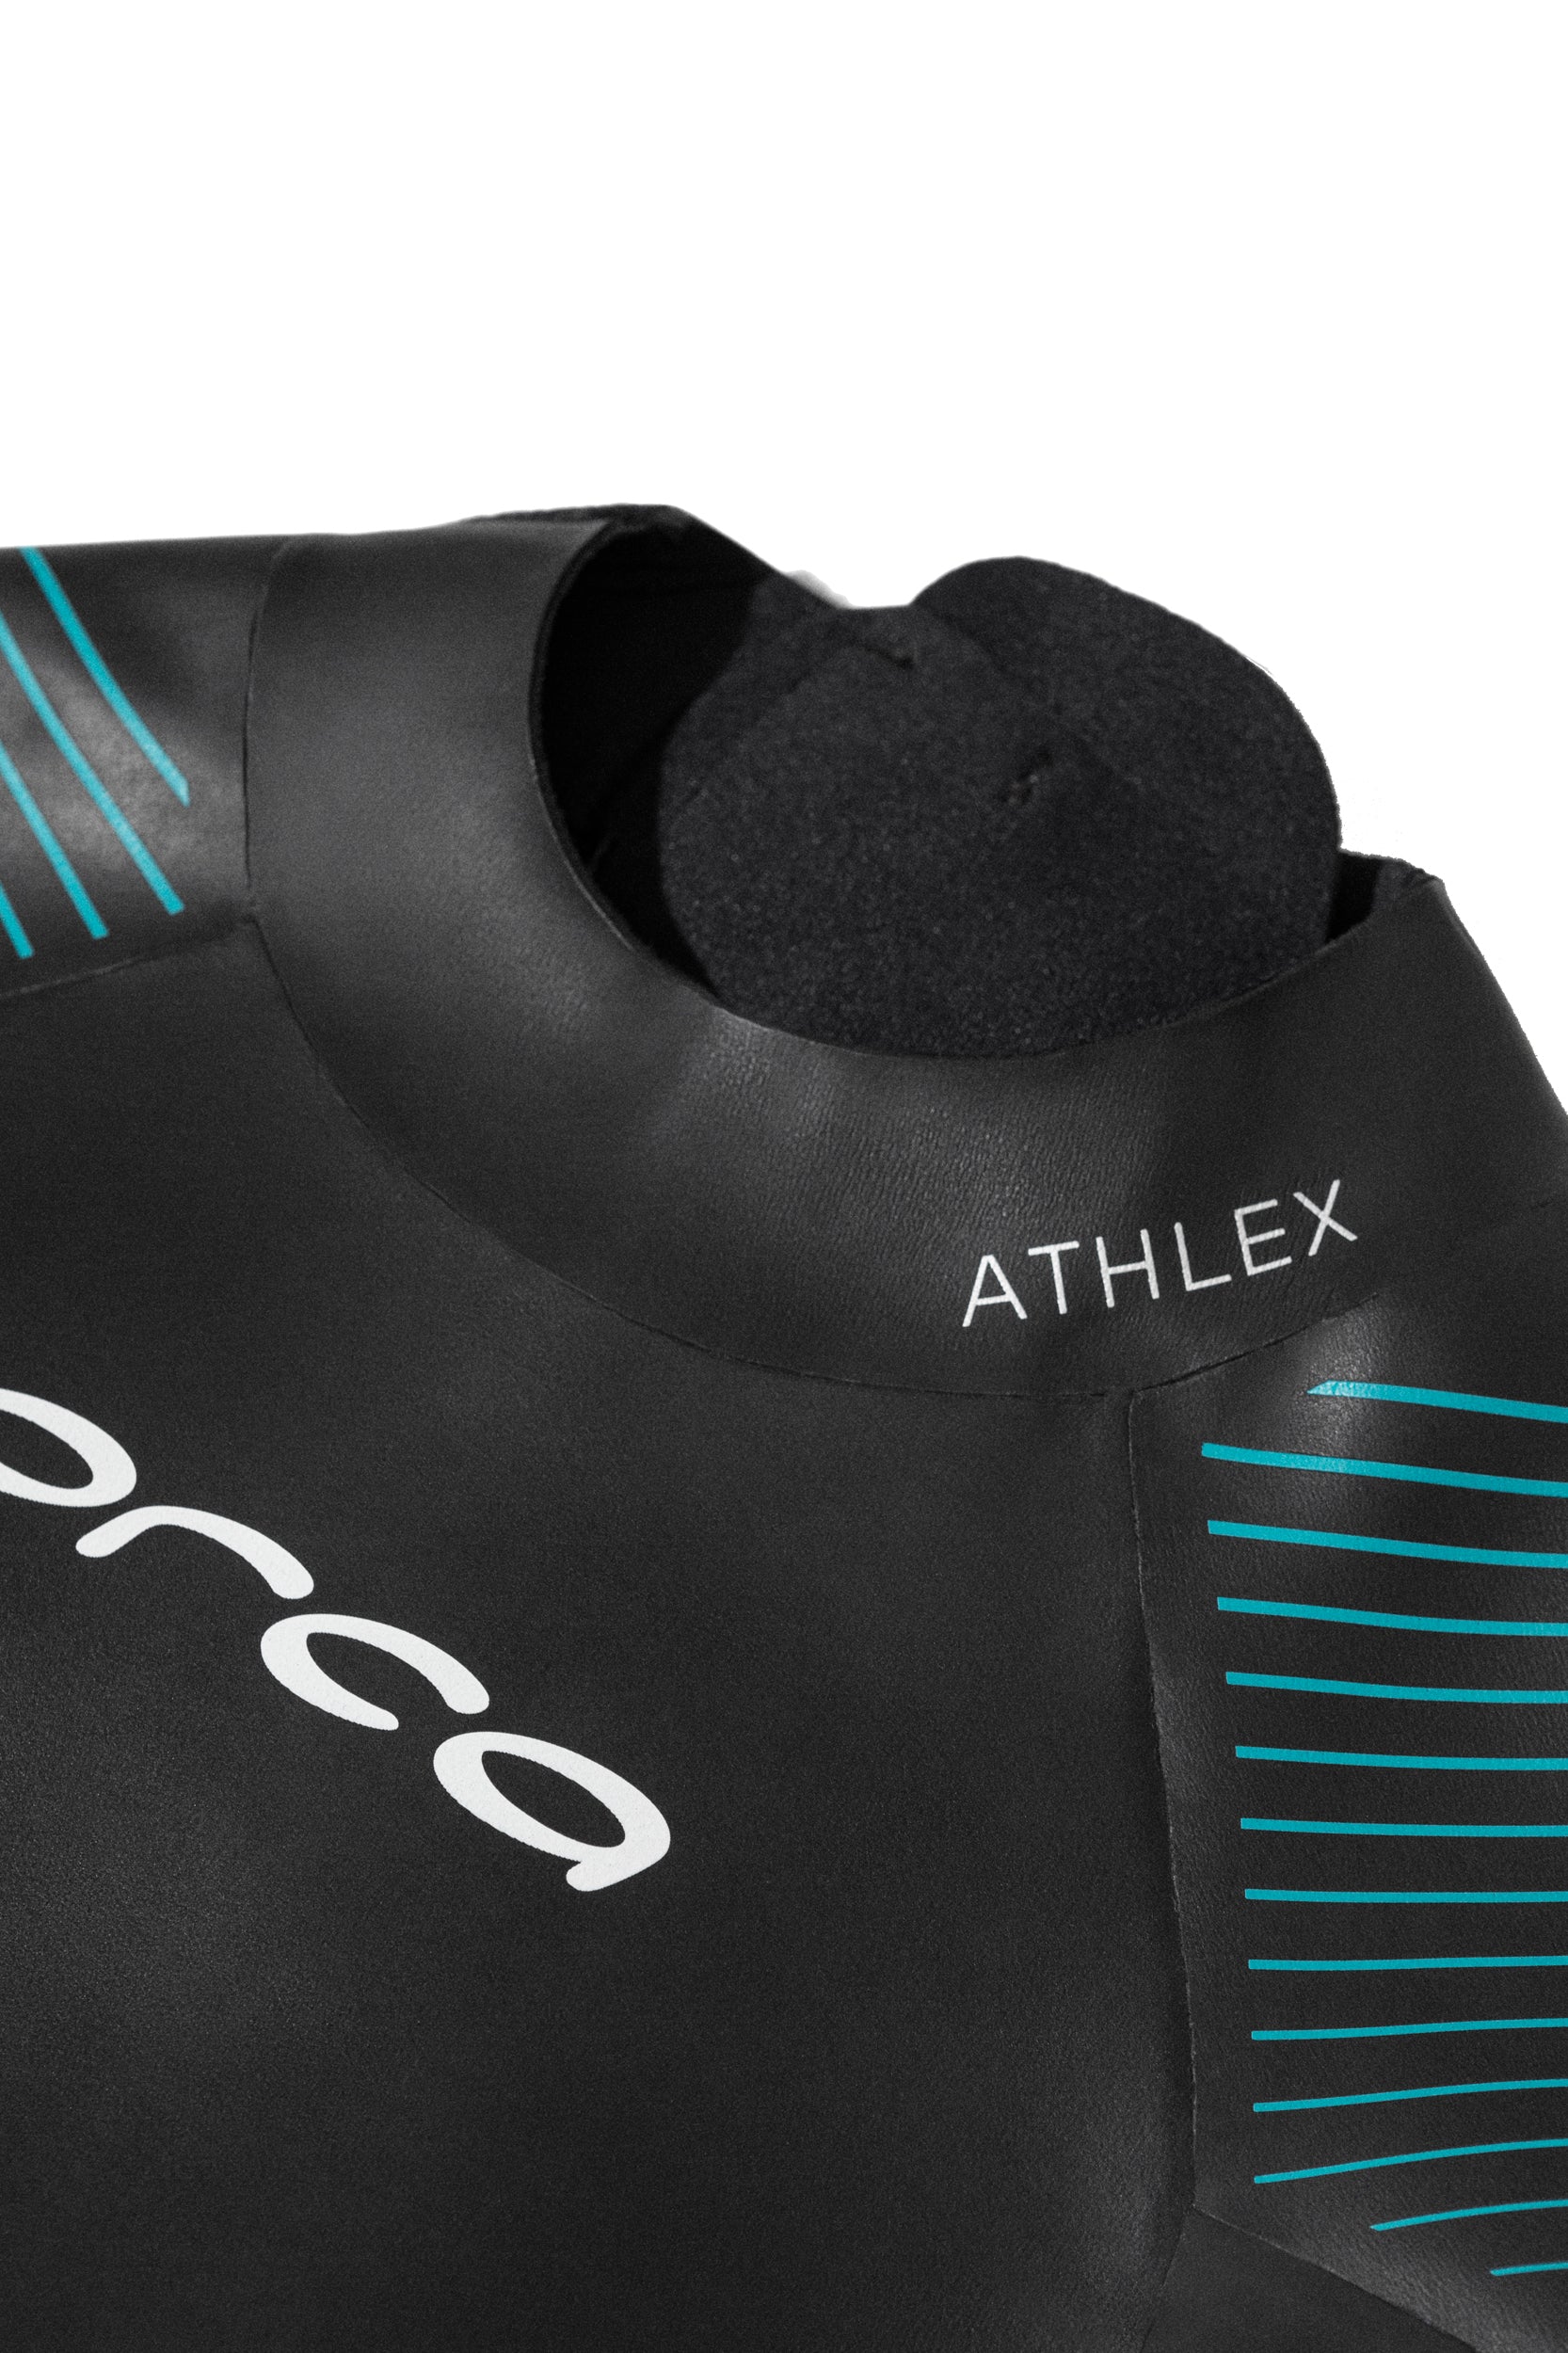 Orca Women's Athlex FLEX Swimming Wetsuit | Neck line detail